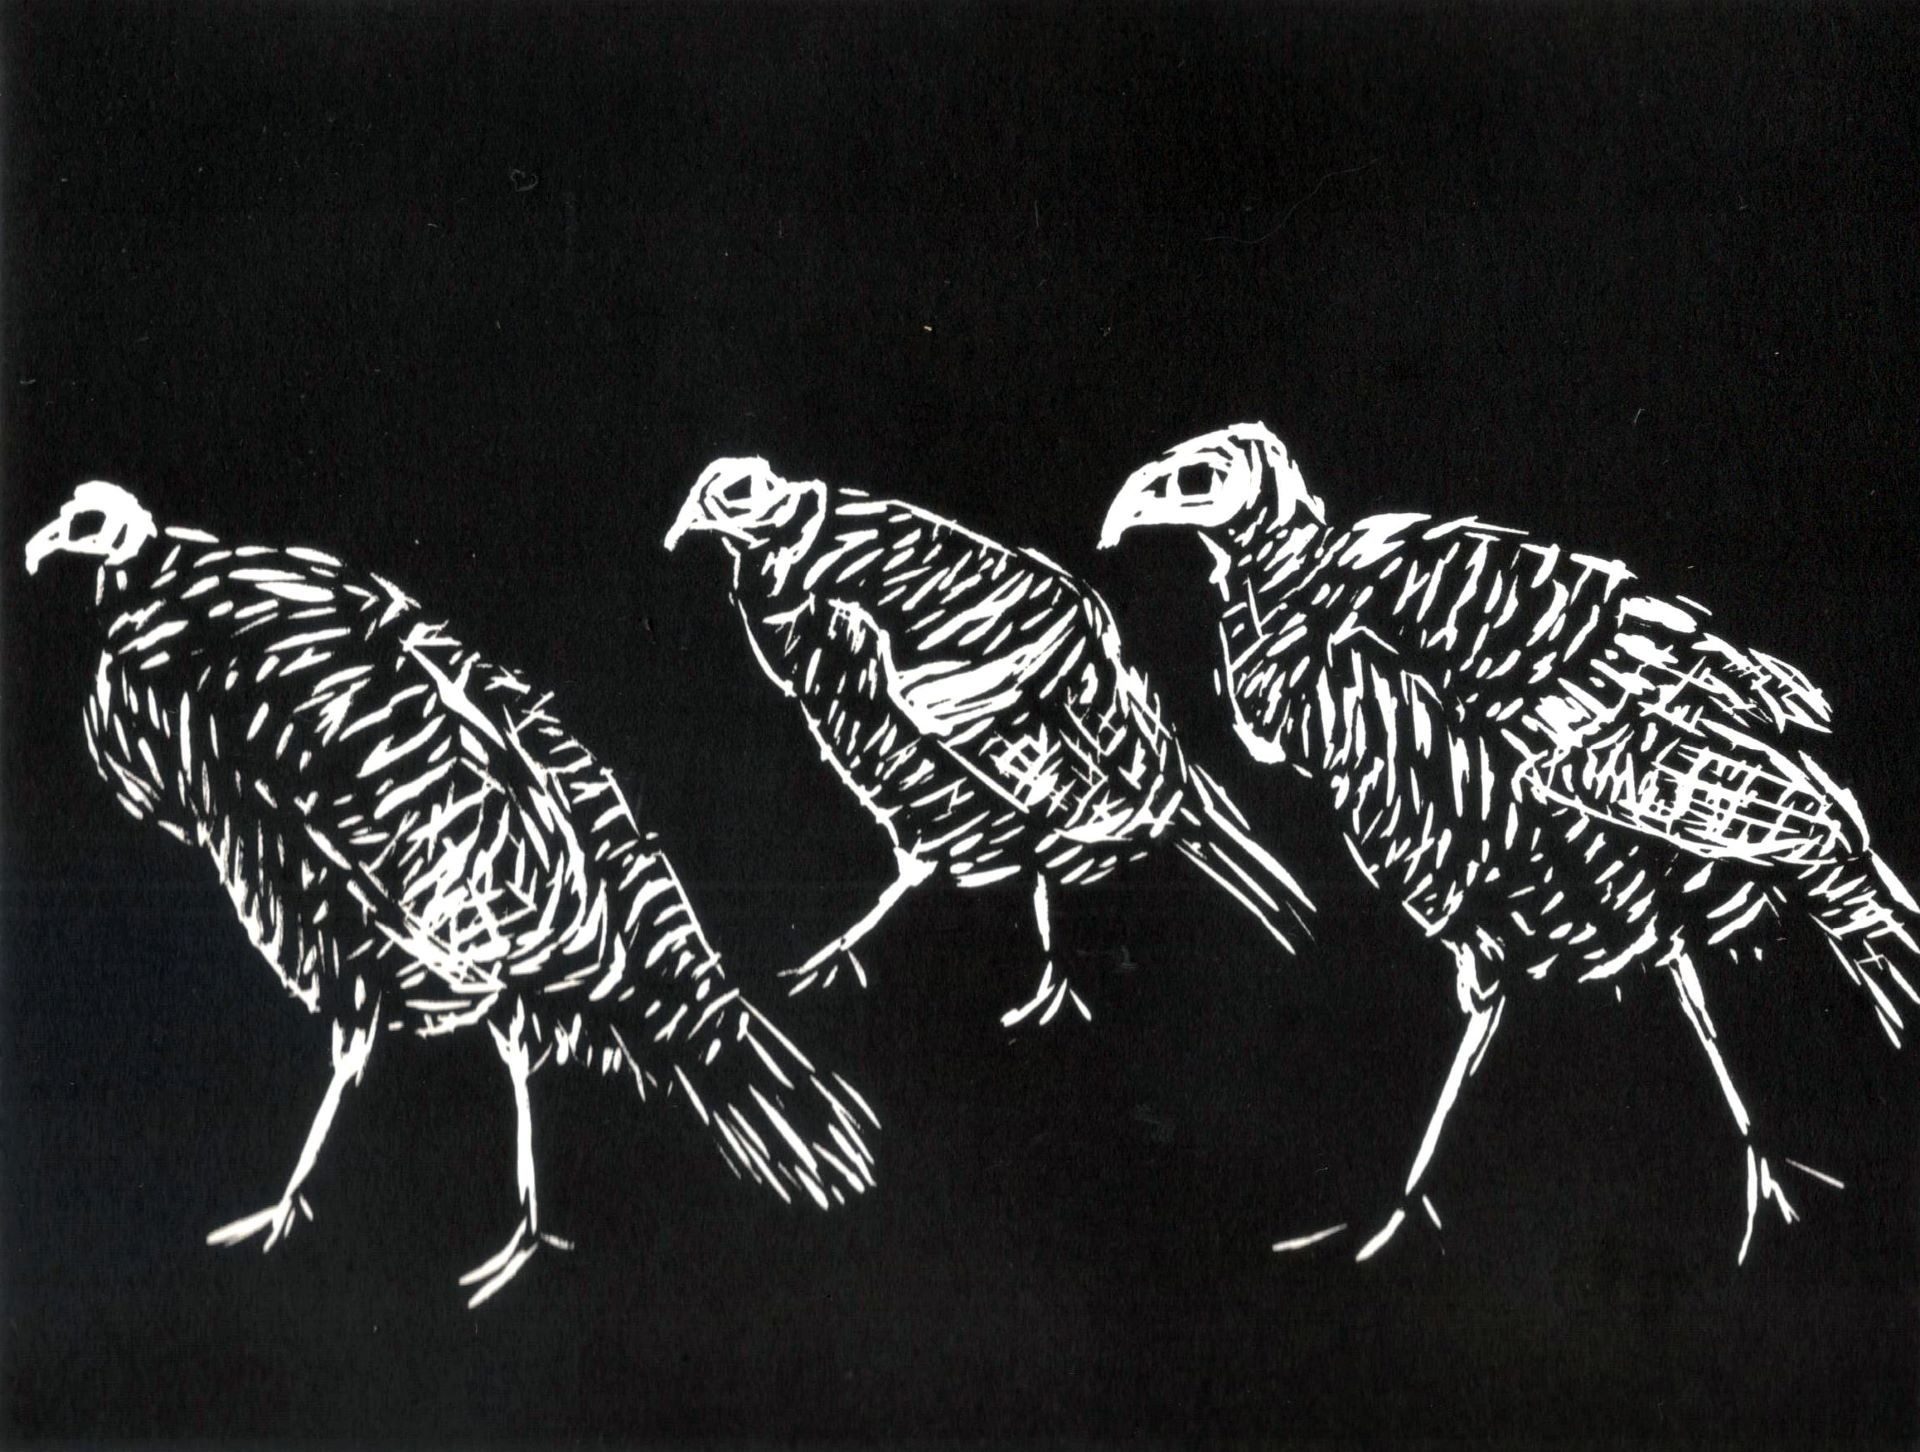 Black and white print of 2 pheasant like birds